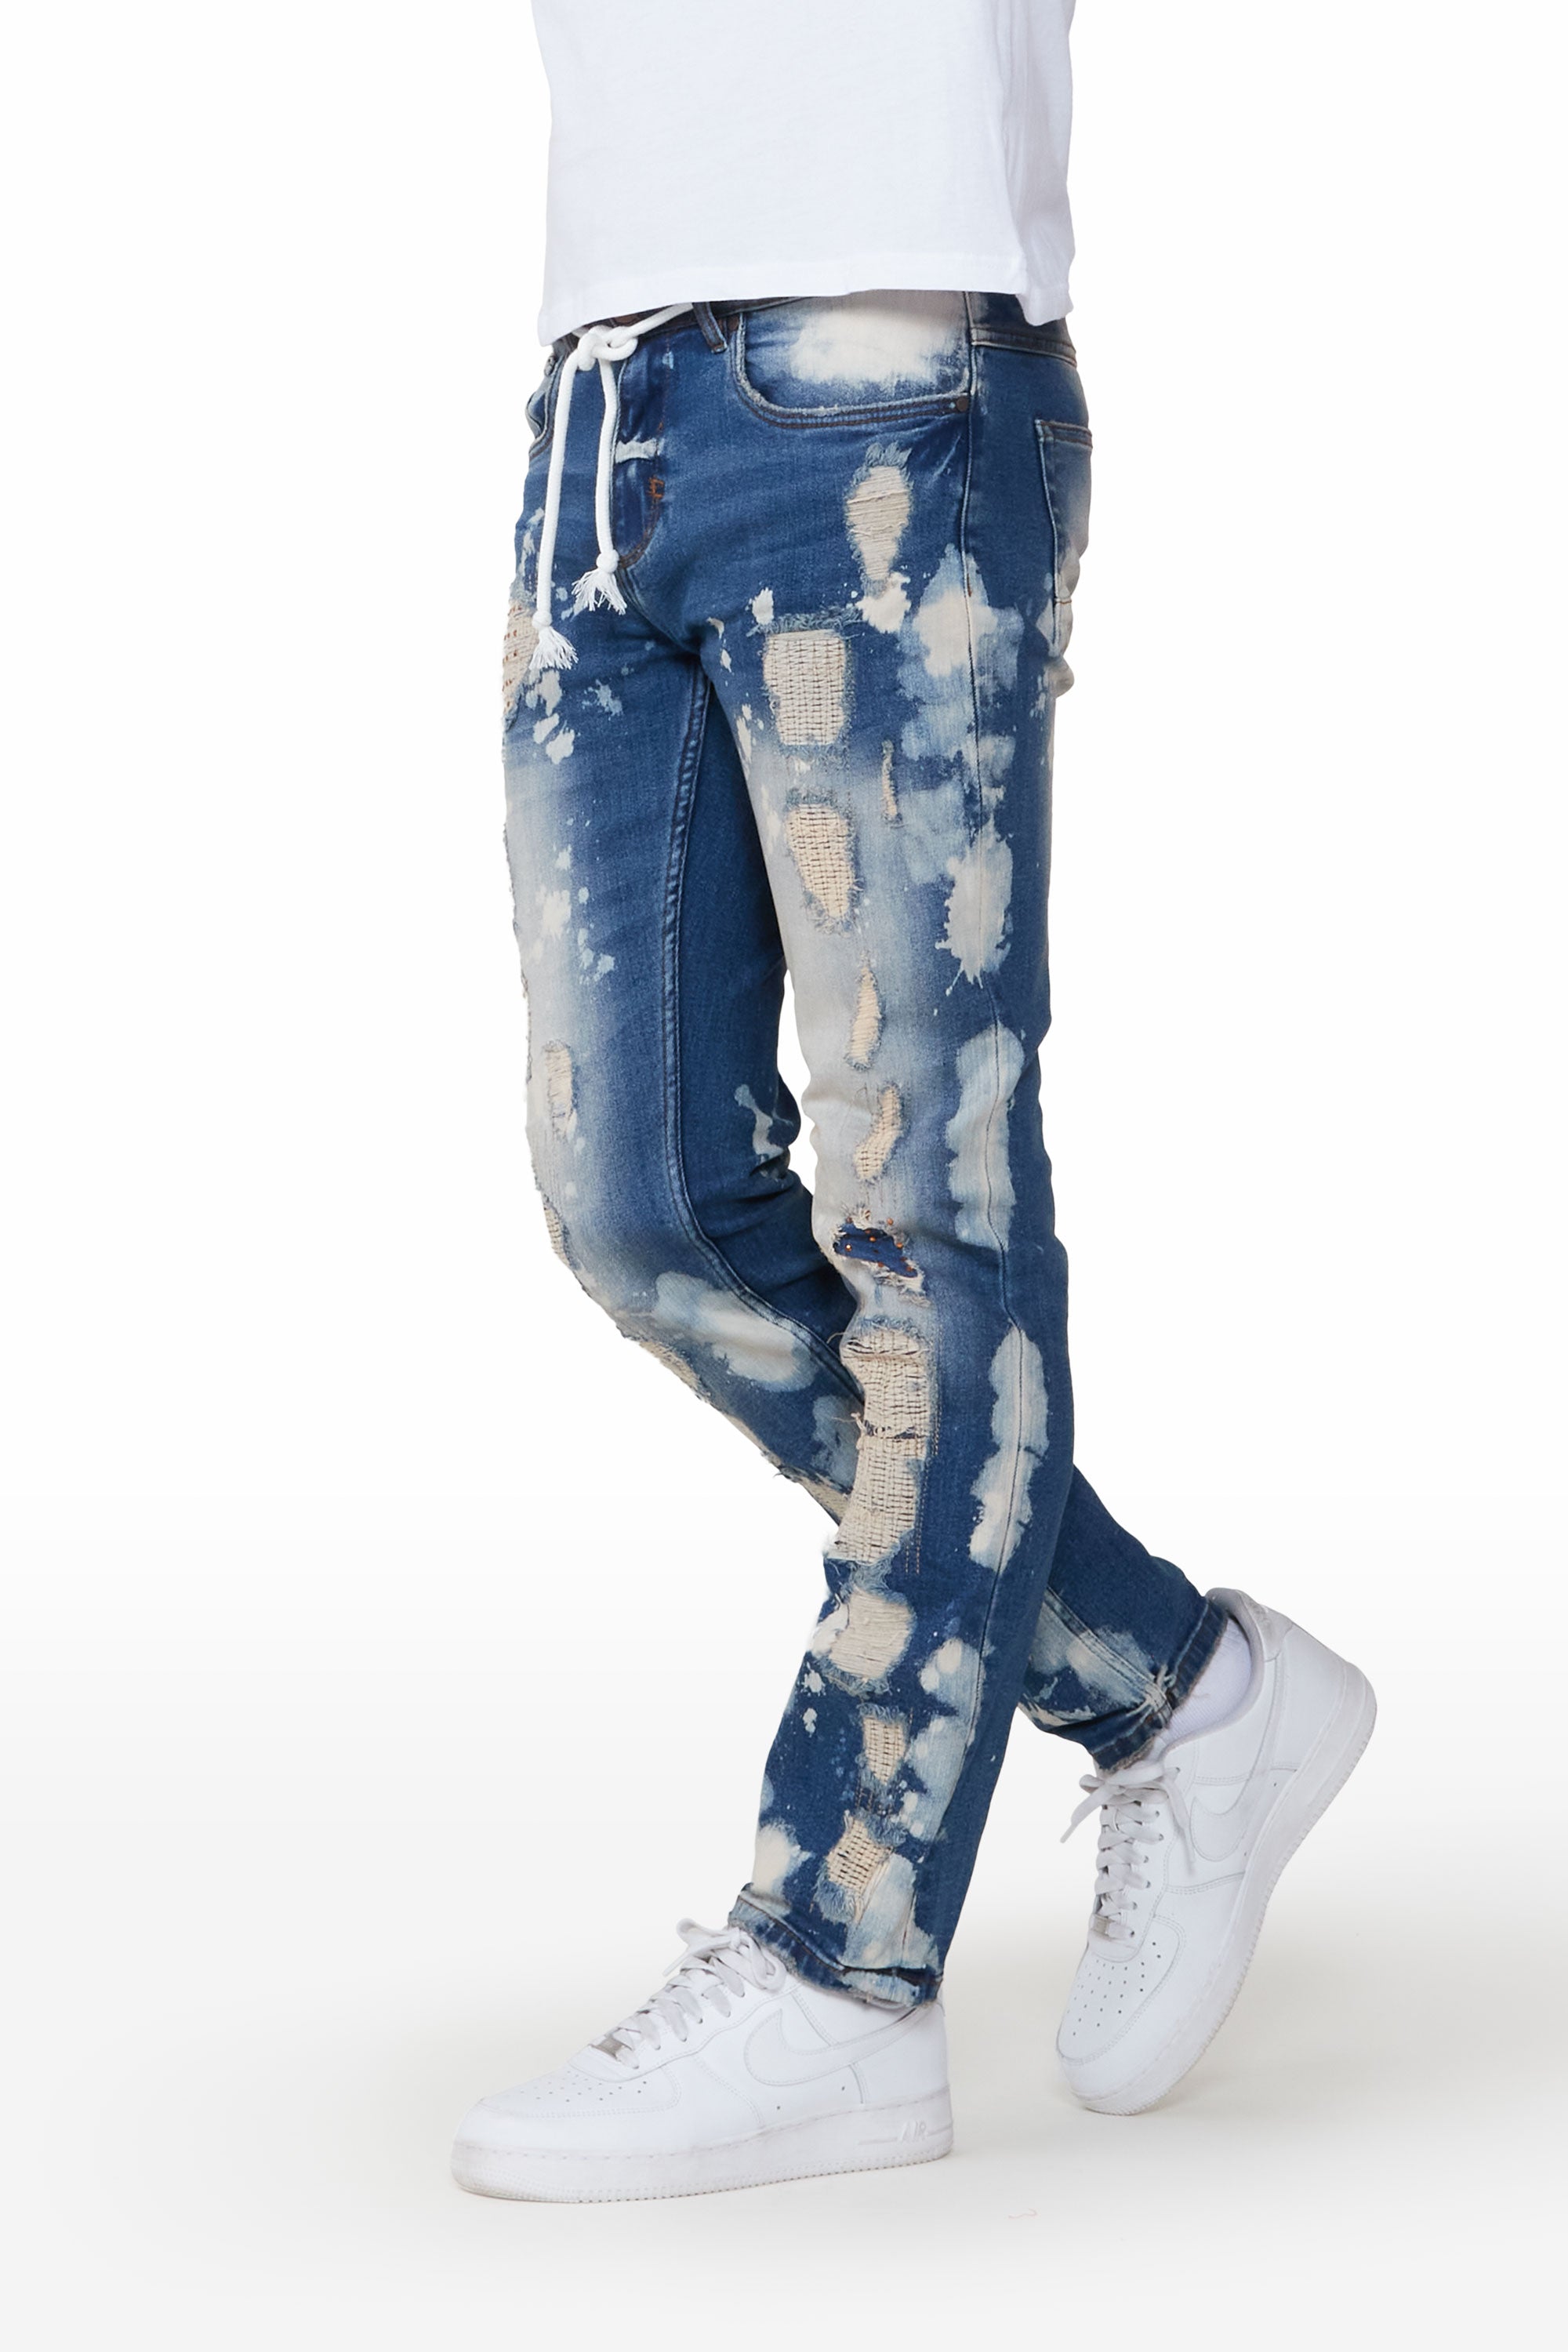 Lenox Blue 5 Pocket Jean